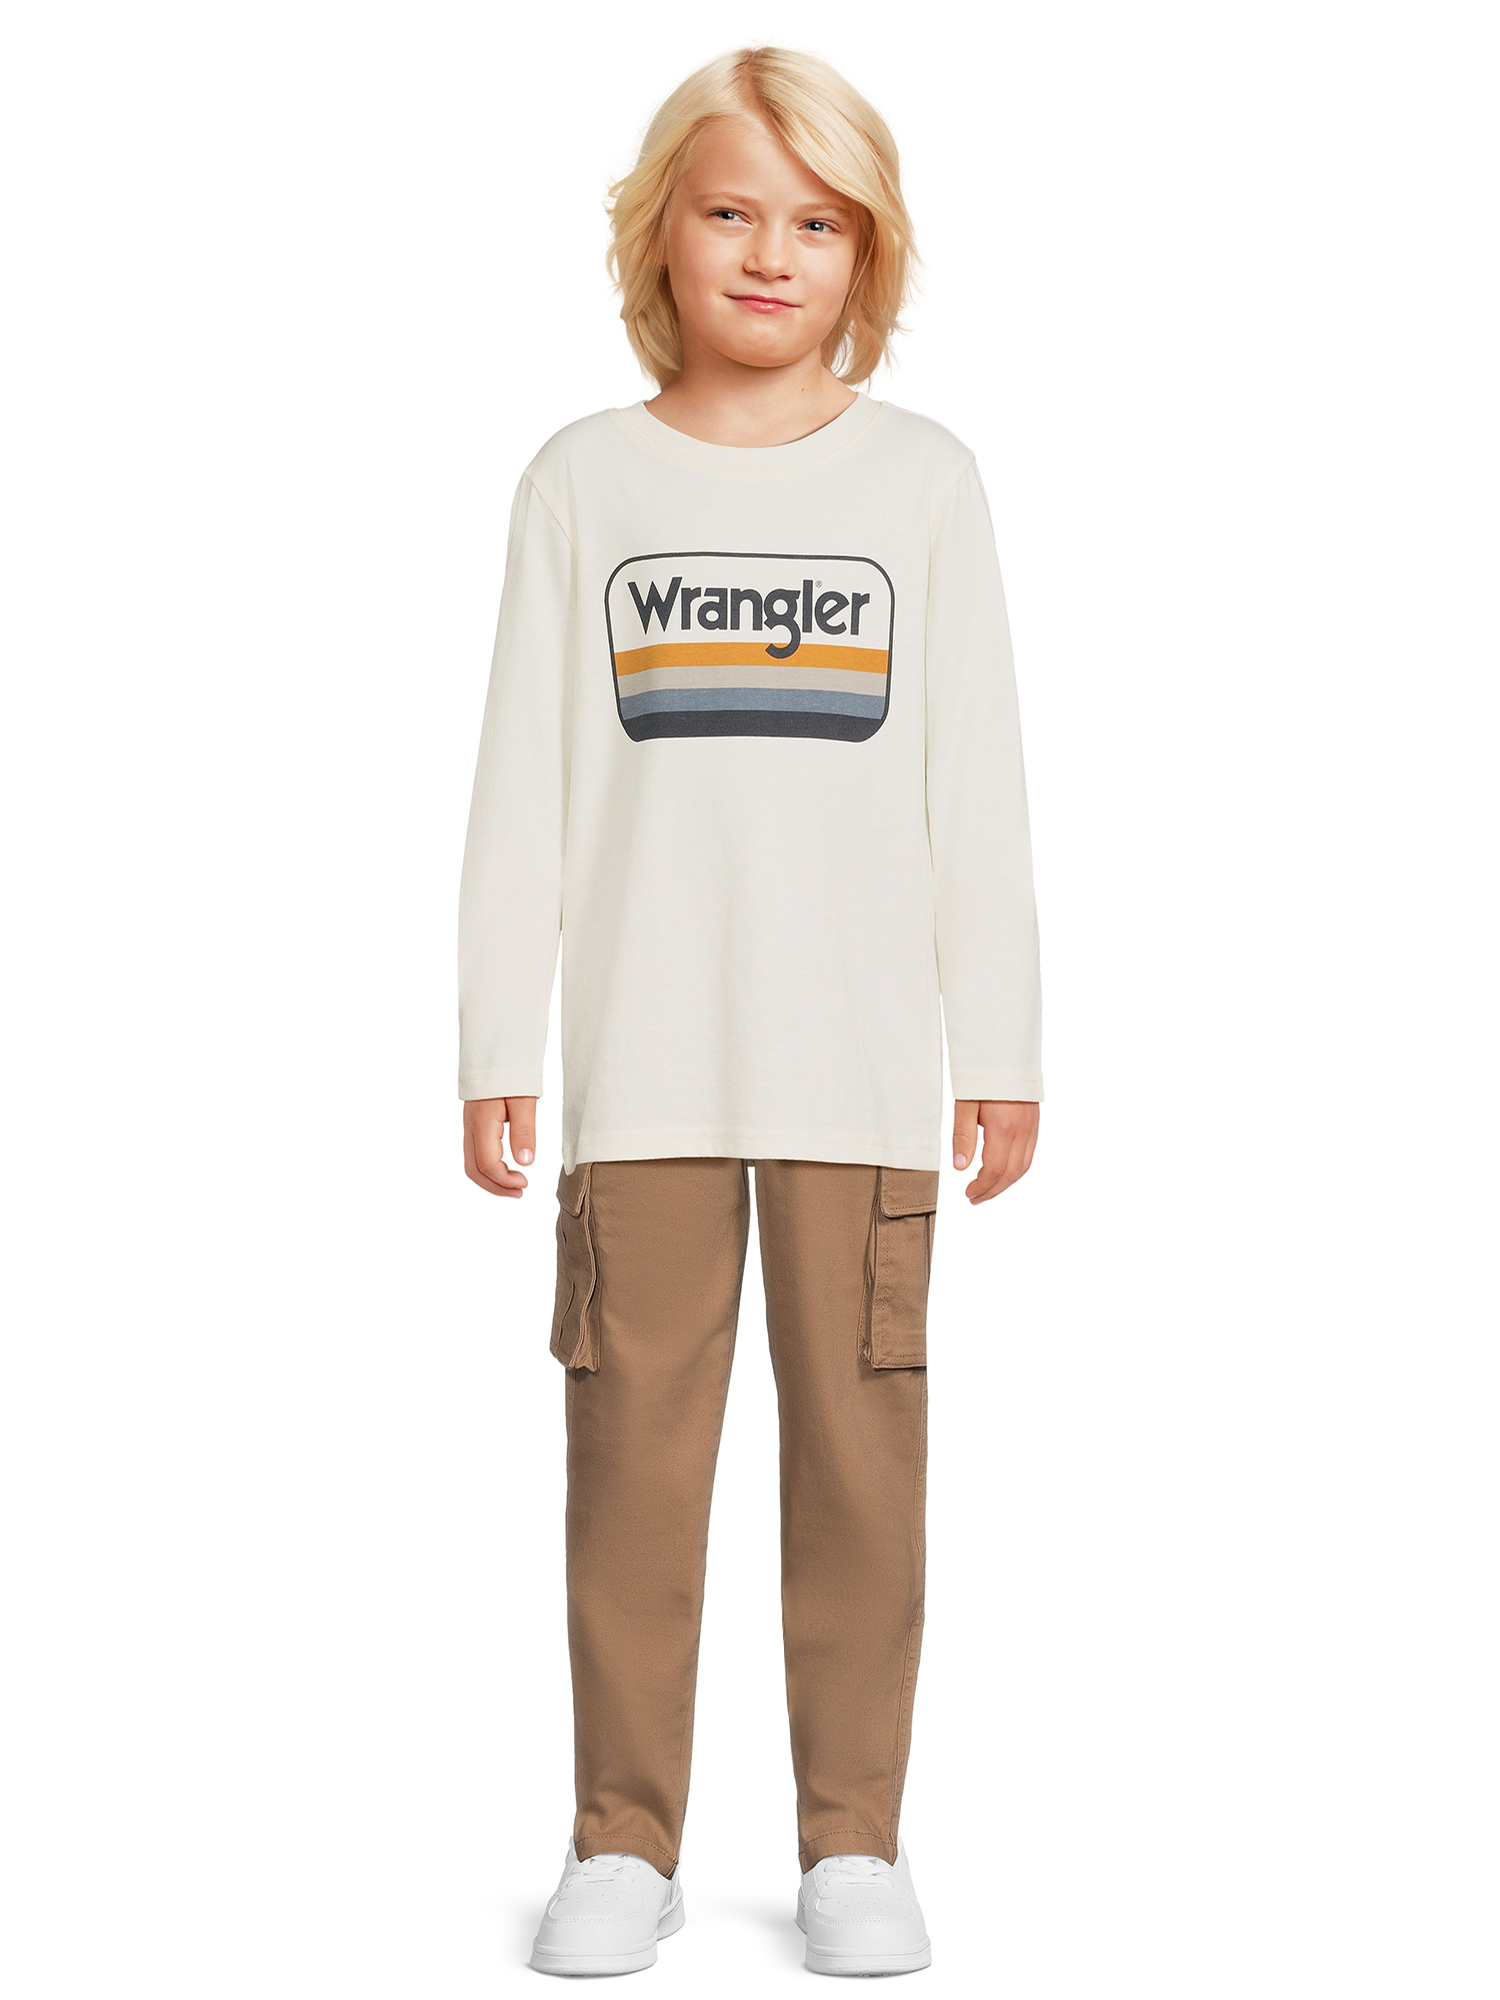 Wrangler Boys Long Sleeve Raglan and Graphic Tee, 2-Pack, Sizes 4-18 & Husky - image 3 of 5